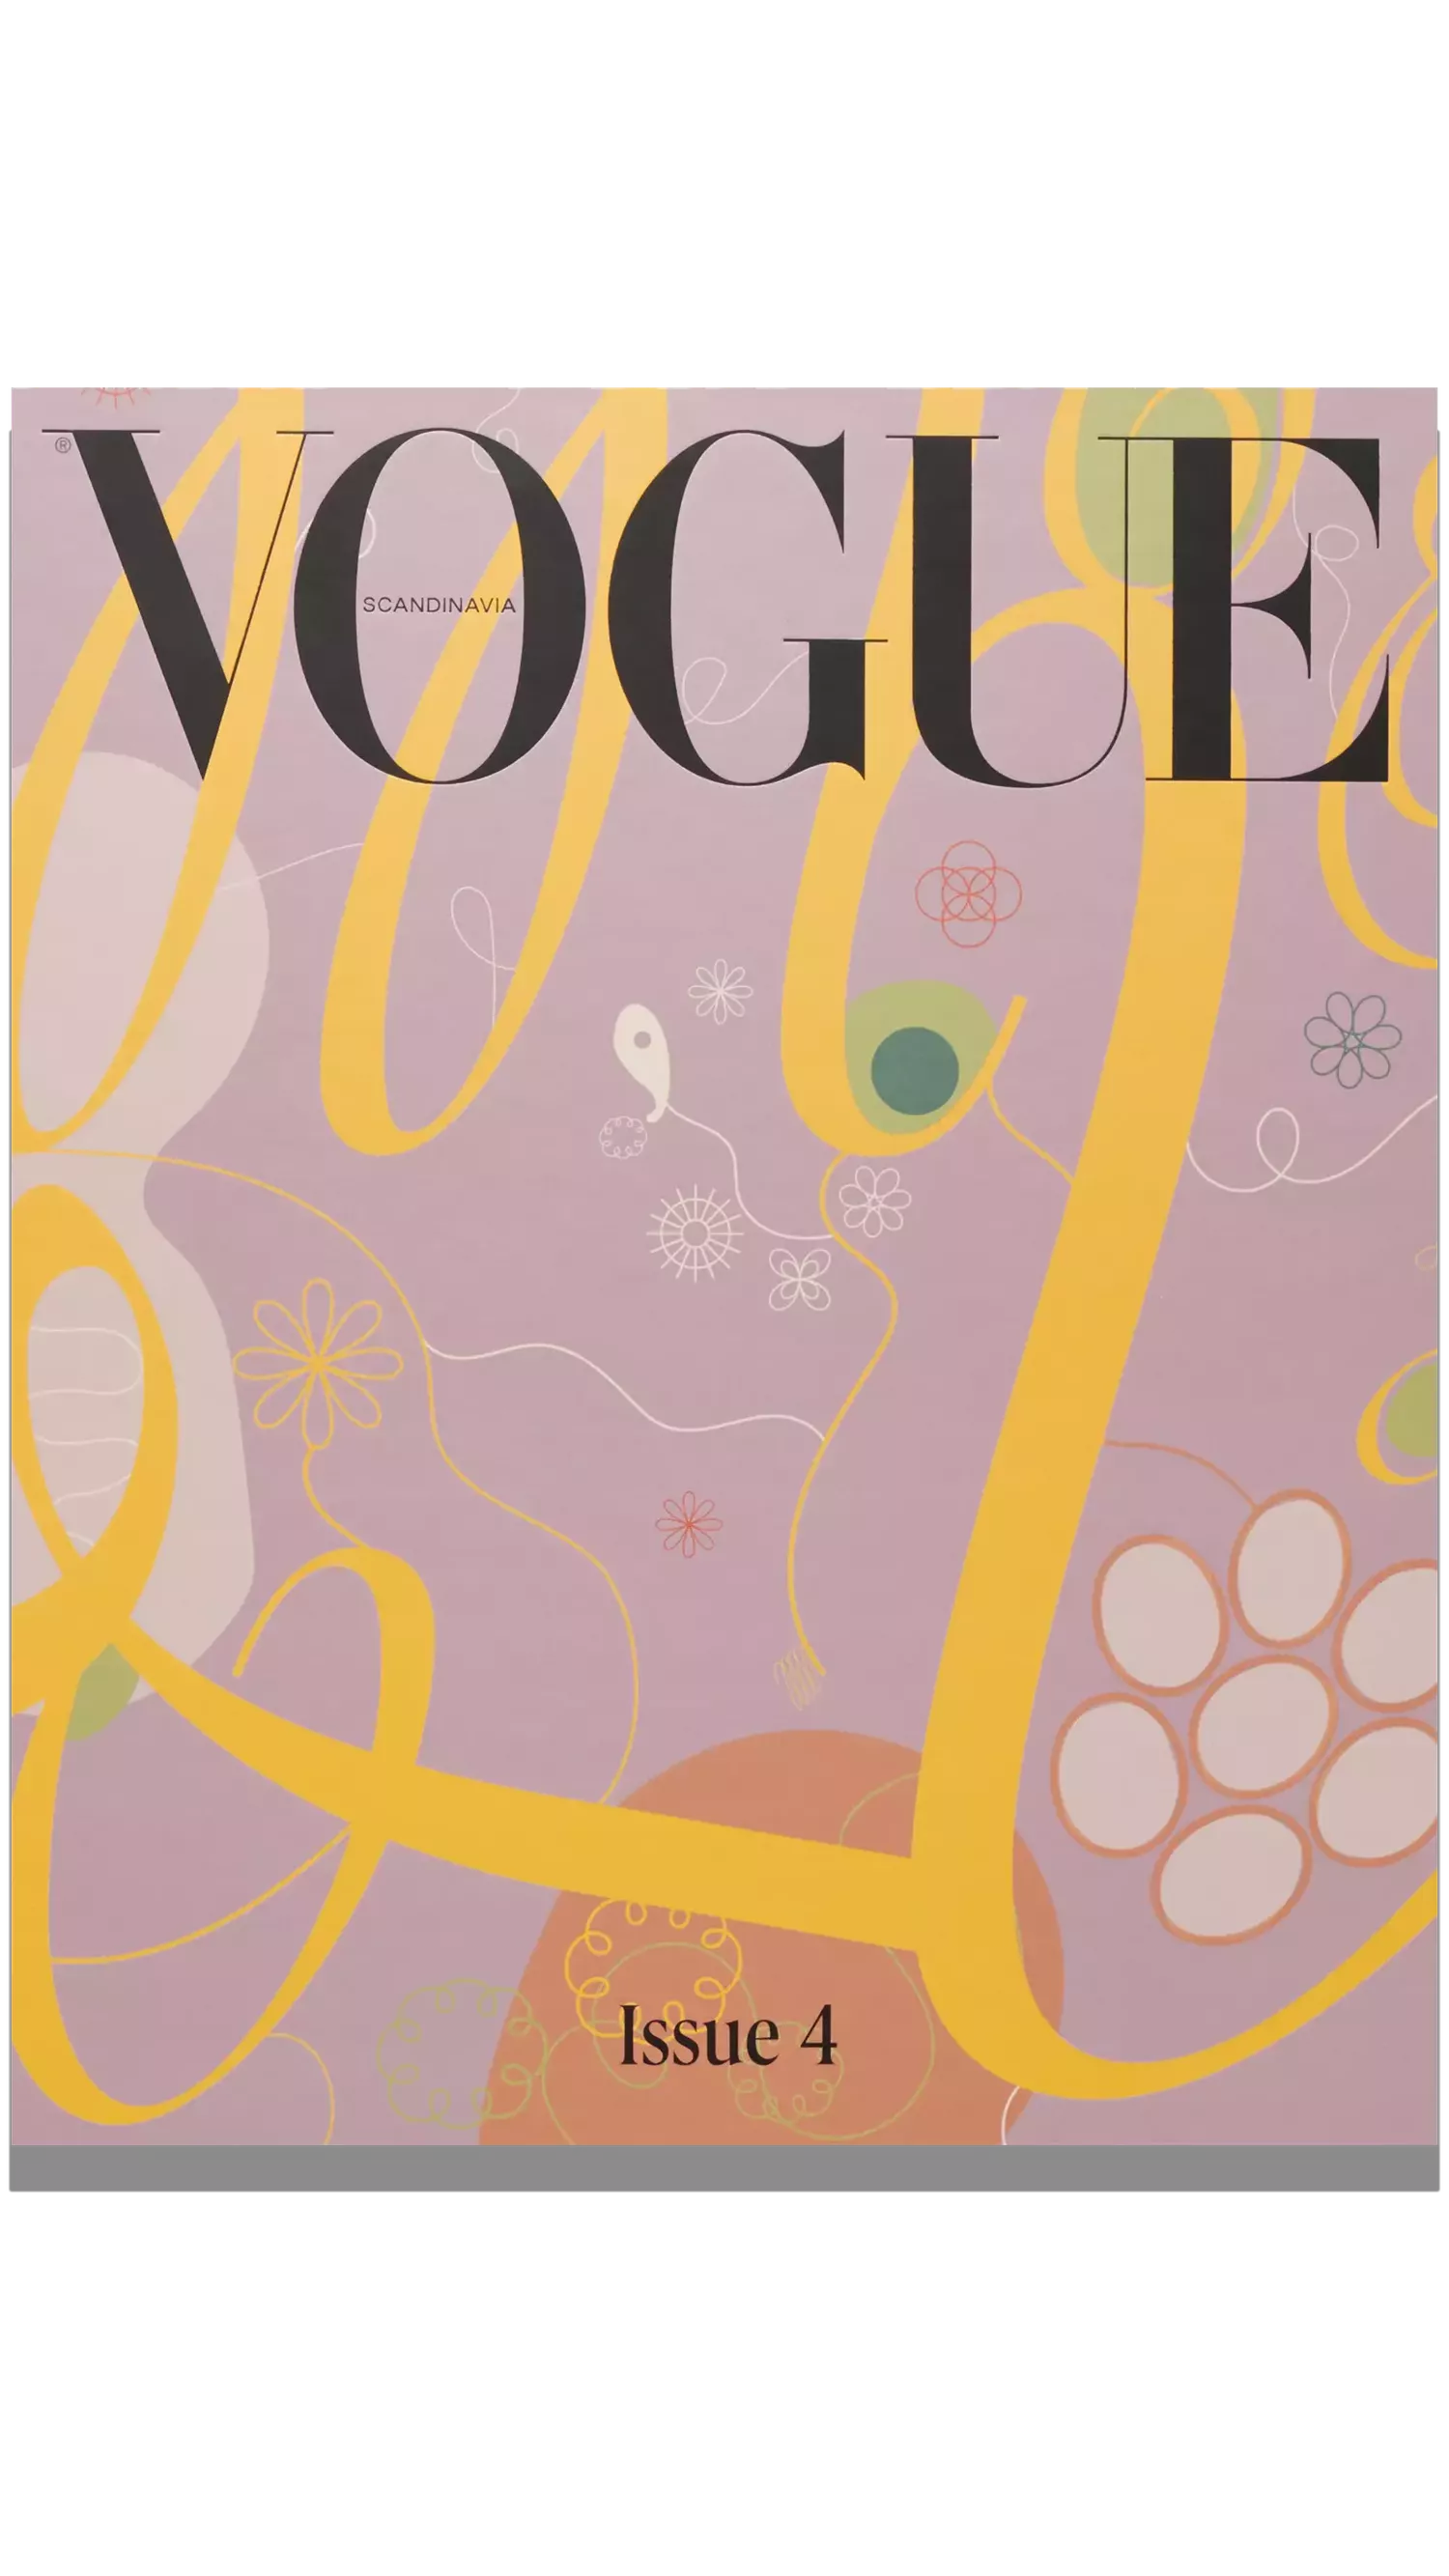 Vogue Scandinavia Collector's Edition Issue 4 - Vogue Scandinavia